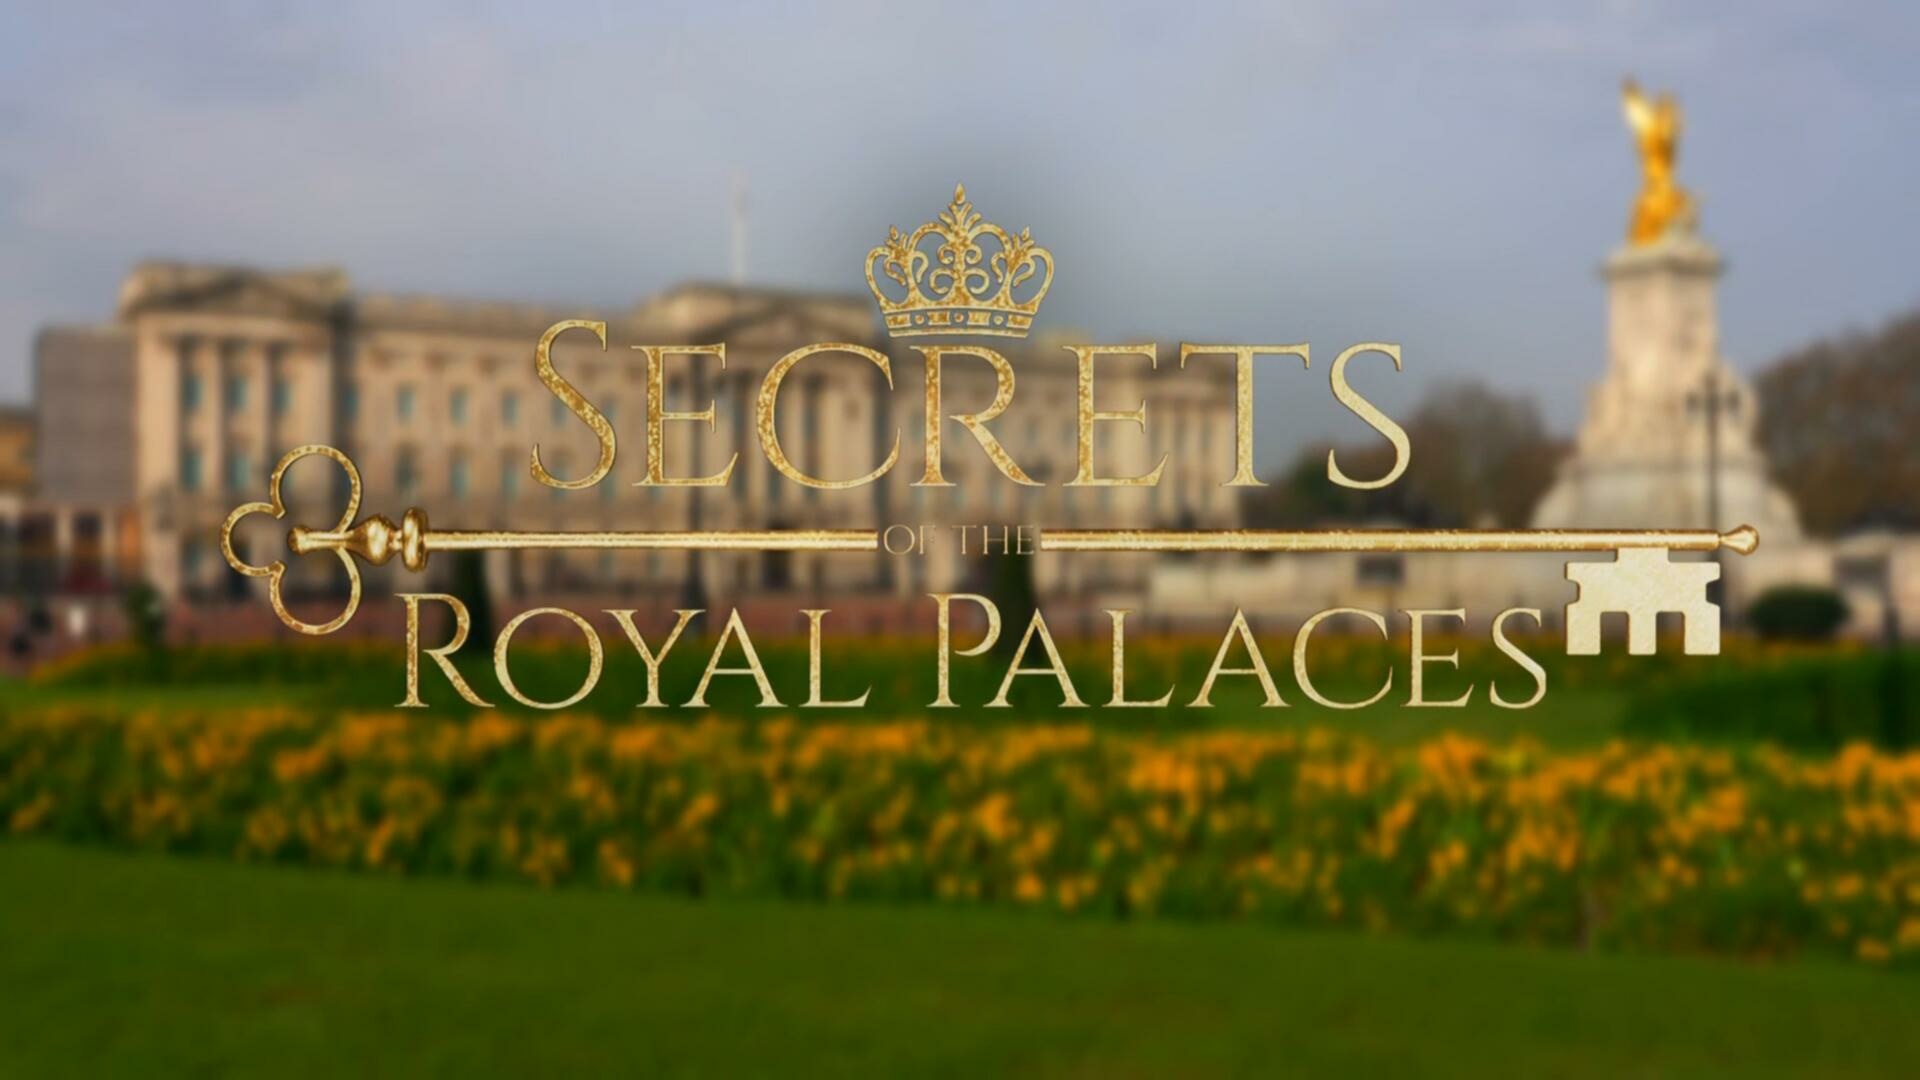 Secrets of the Royal Palaces S05E01 1080p HDTV H264 DARKFLiX TGx